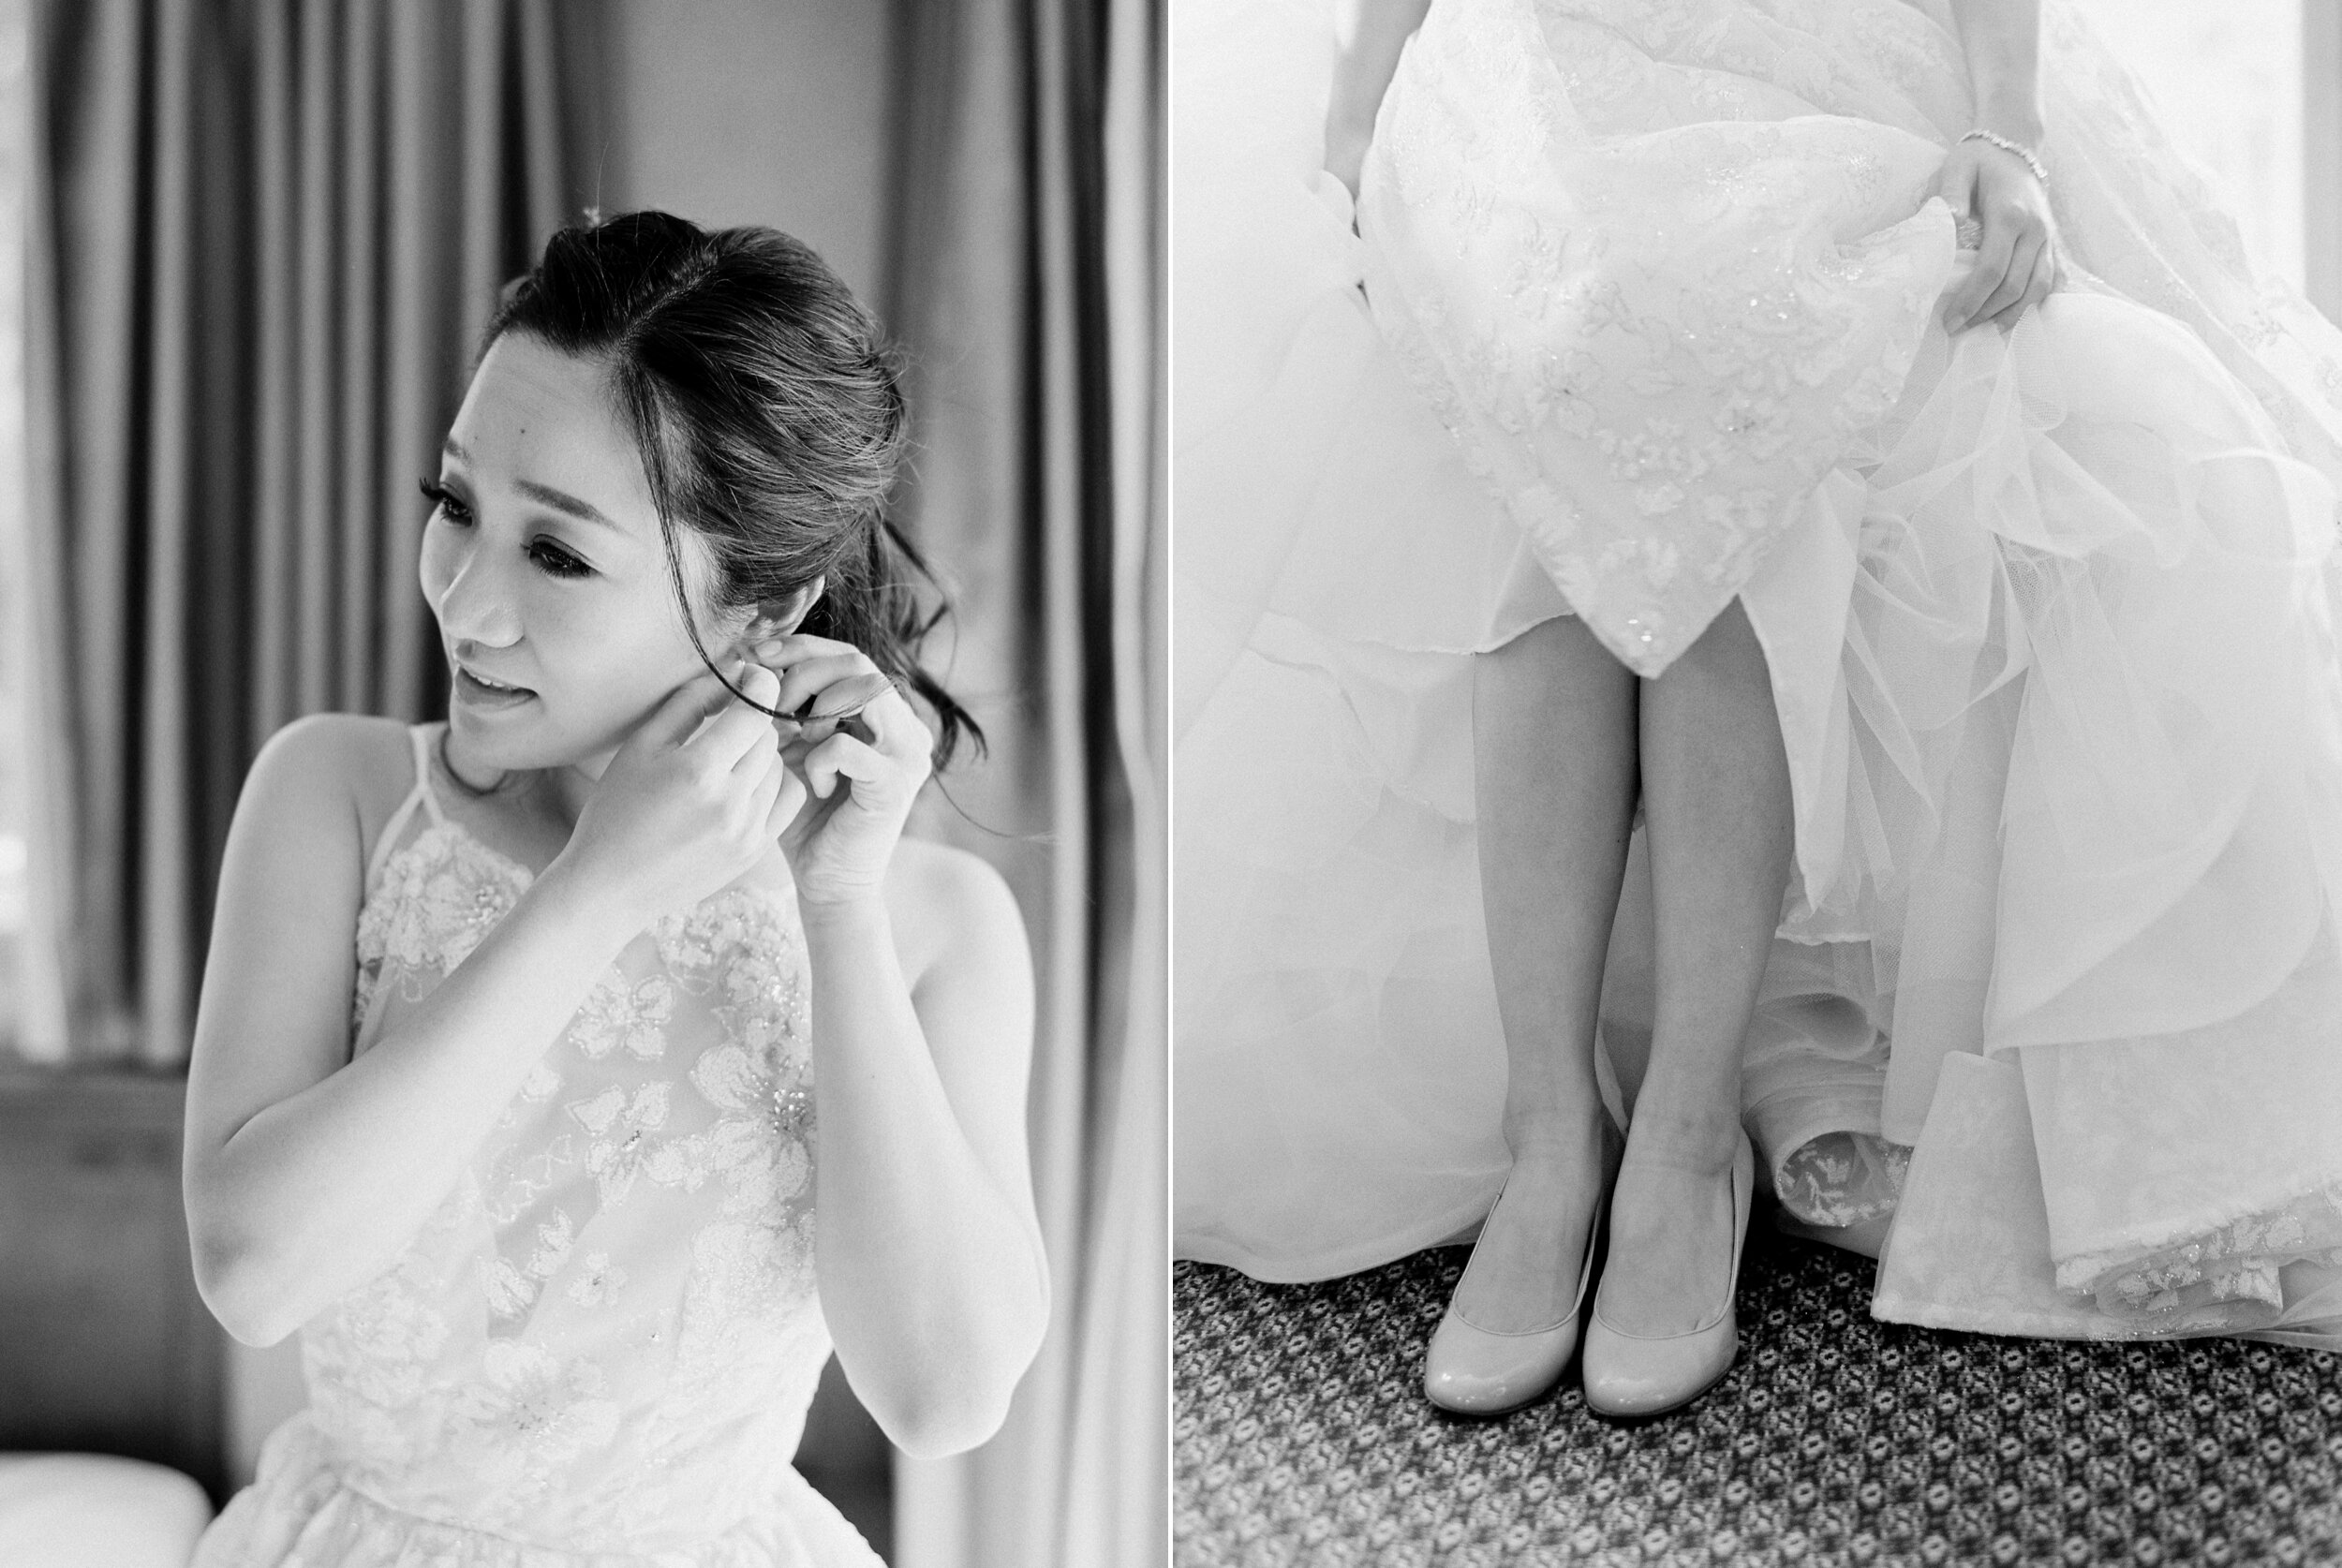  Banff wedding photographer | intimate wedding elopement | Bride getting ready details | Justine milton photography 